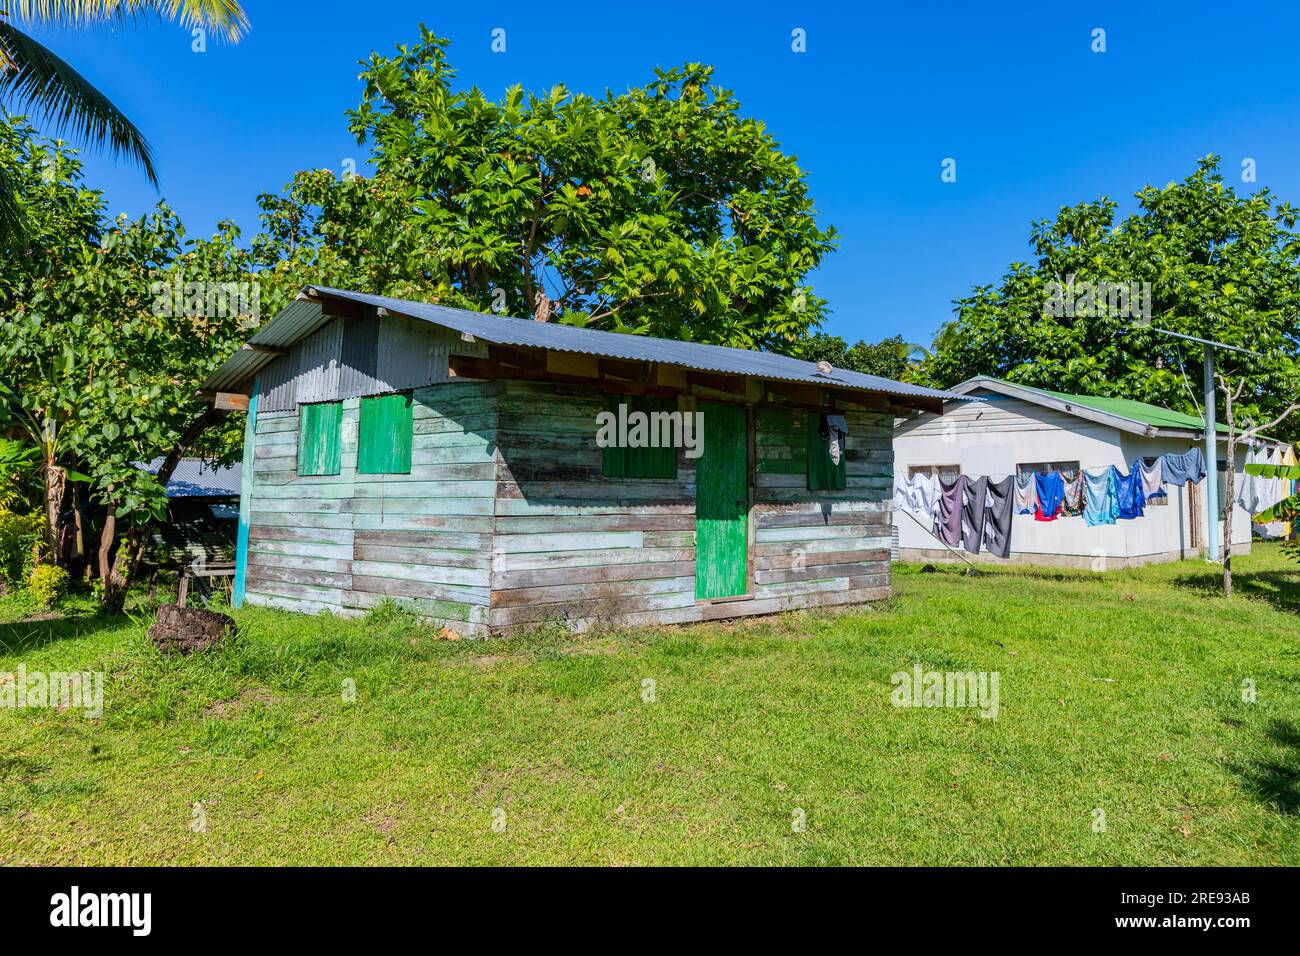 Typical houses in a small village in Viti Levu island, Fiji Stock Photo